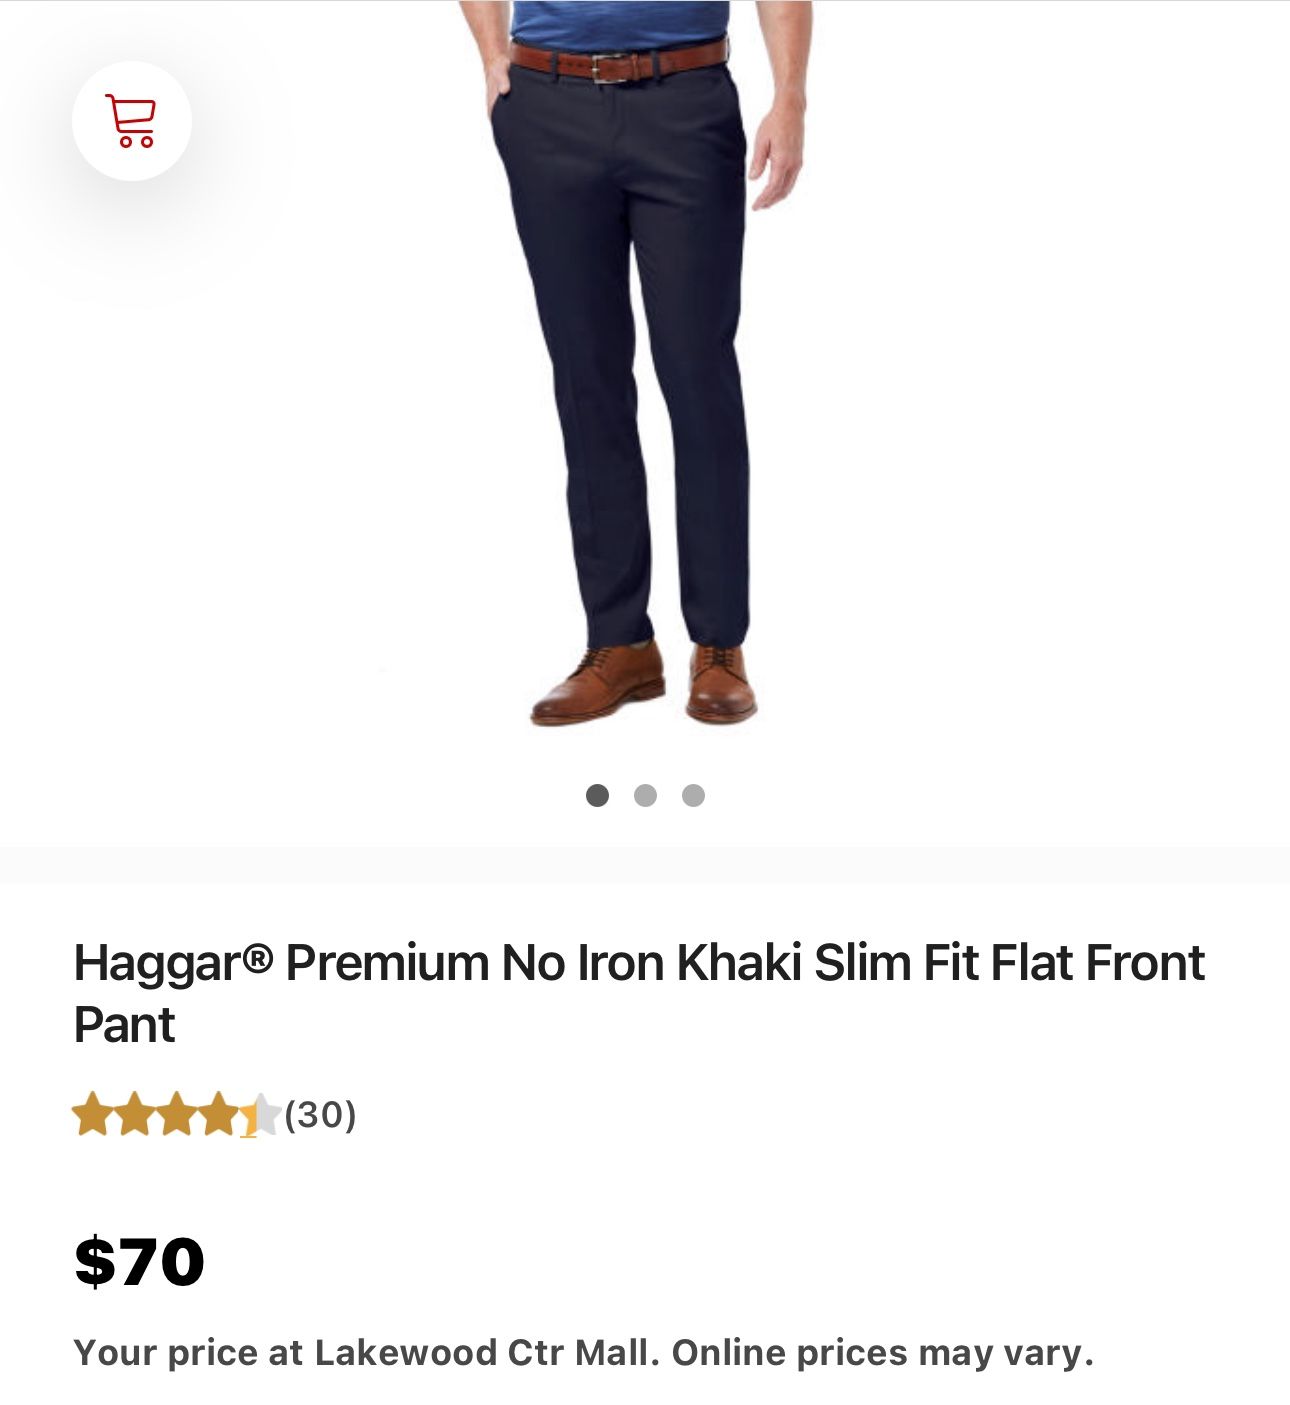 Haggar Premium No Iron Khaki Slim Fit Flat Front Pant